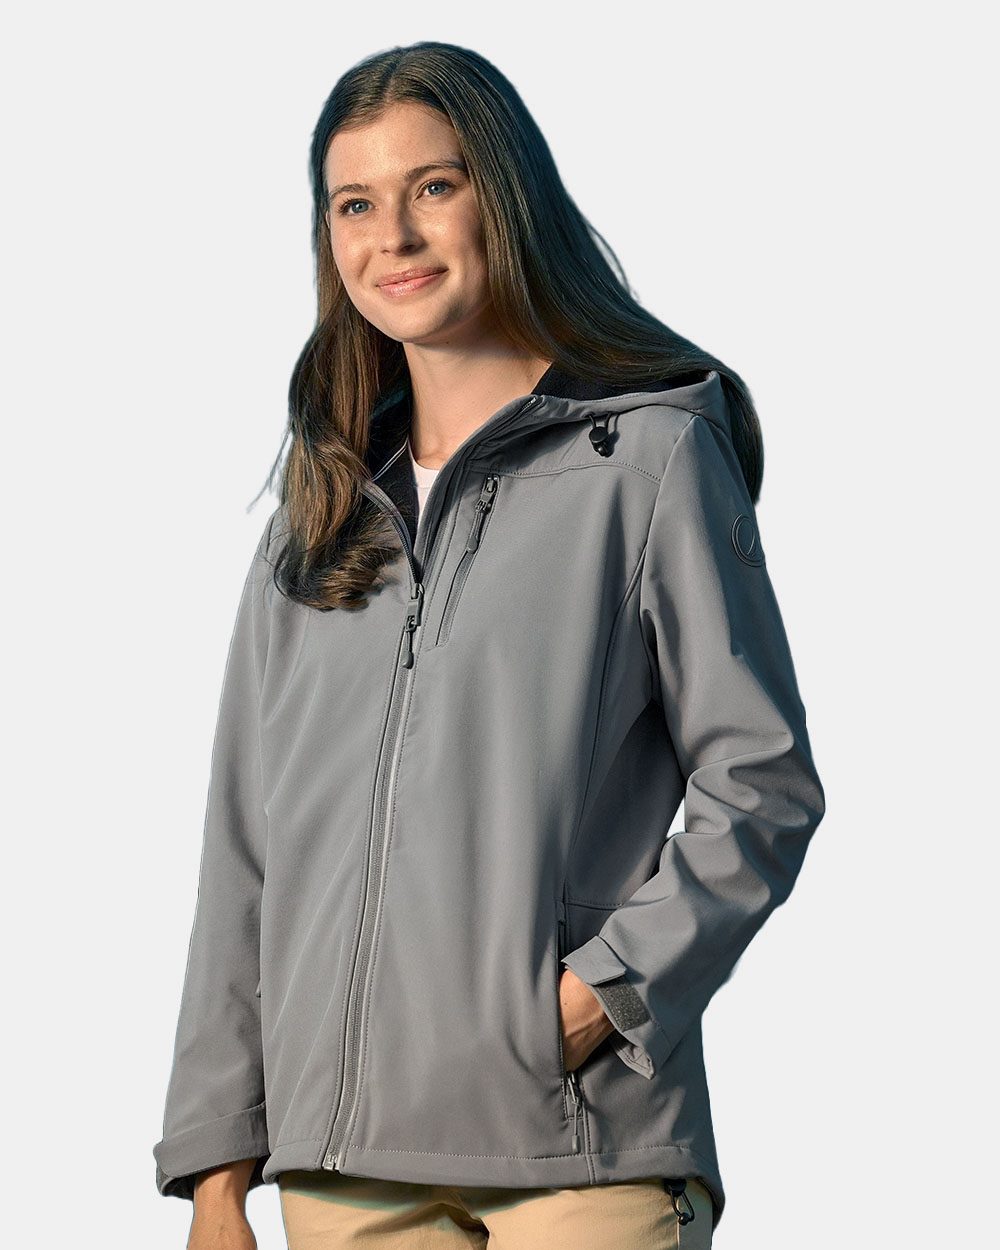 Nautica N17790 - Women's Wavestorm Softshell Hooded Jacket